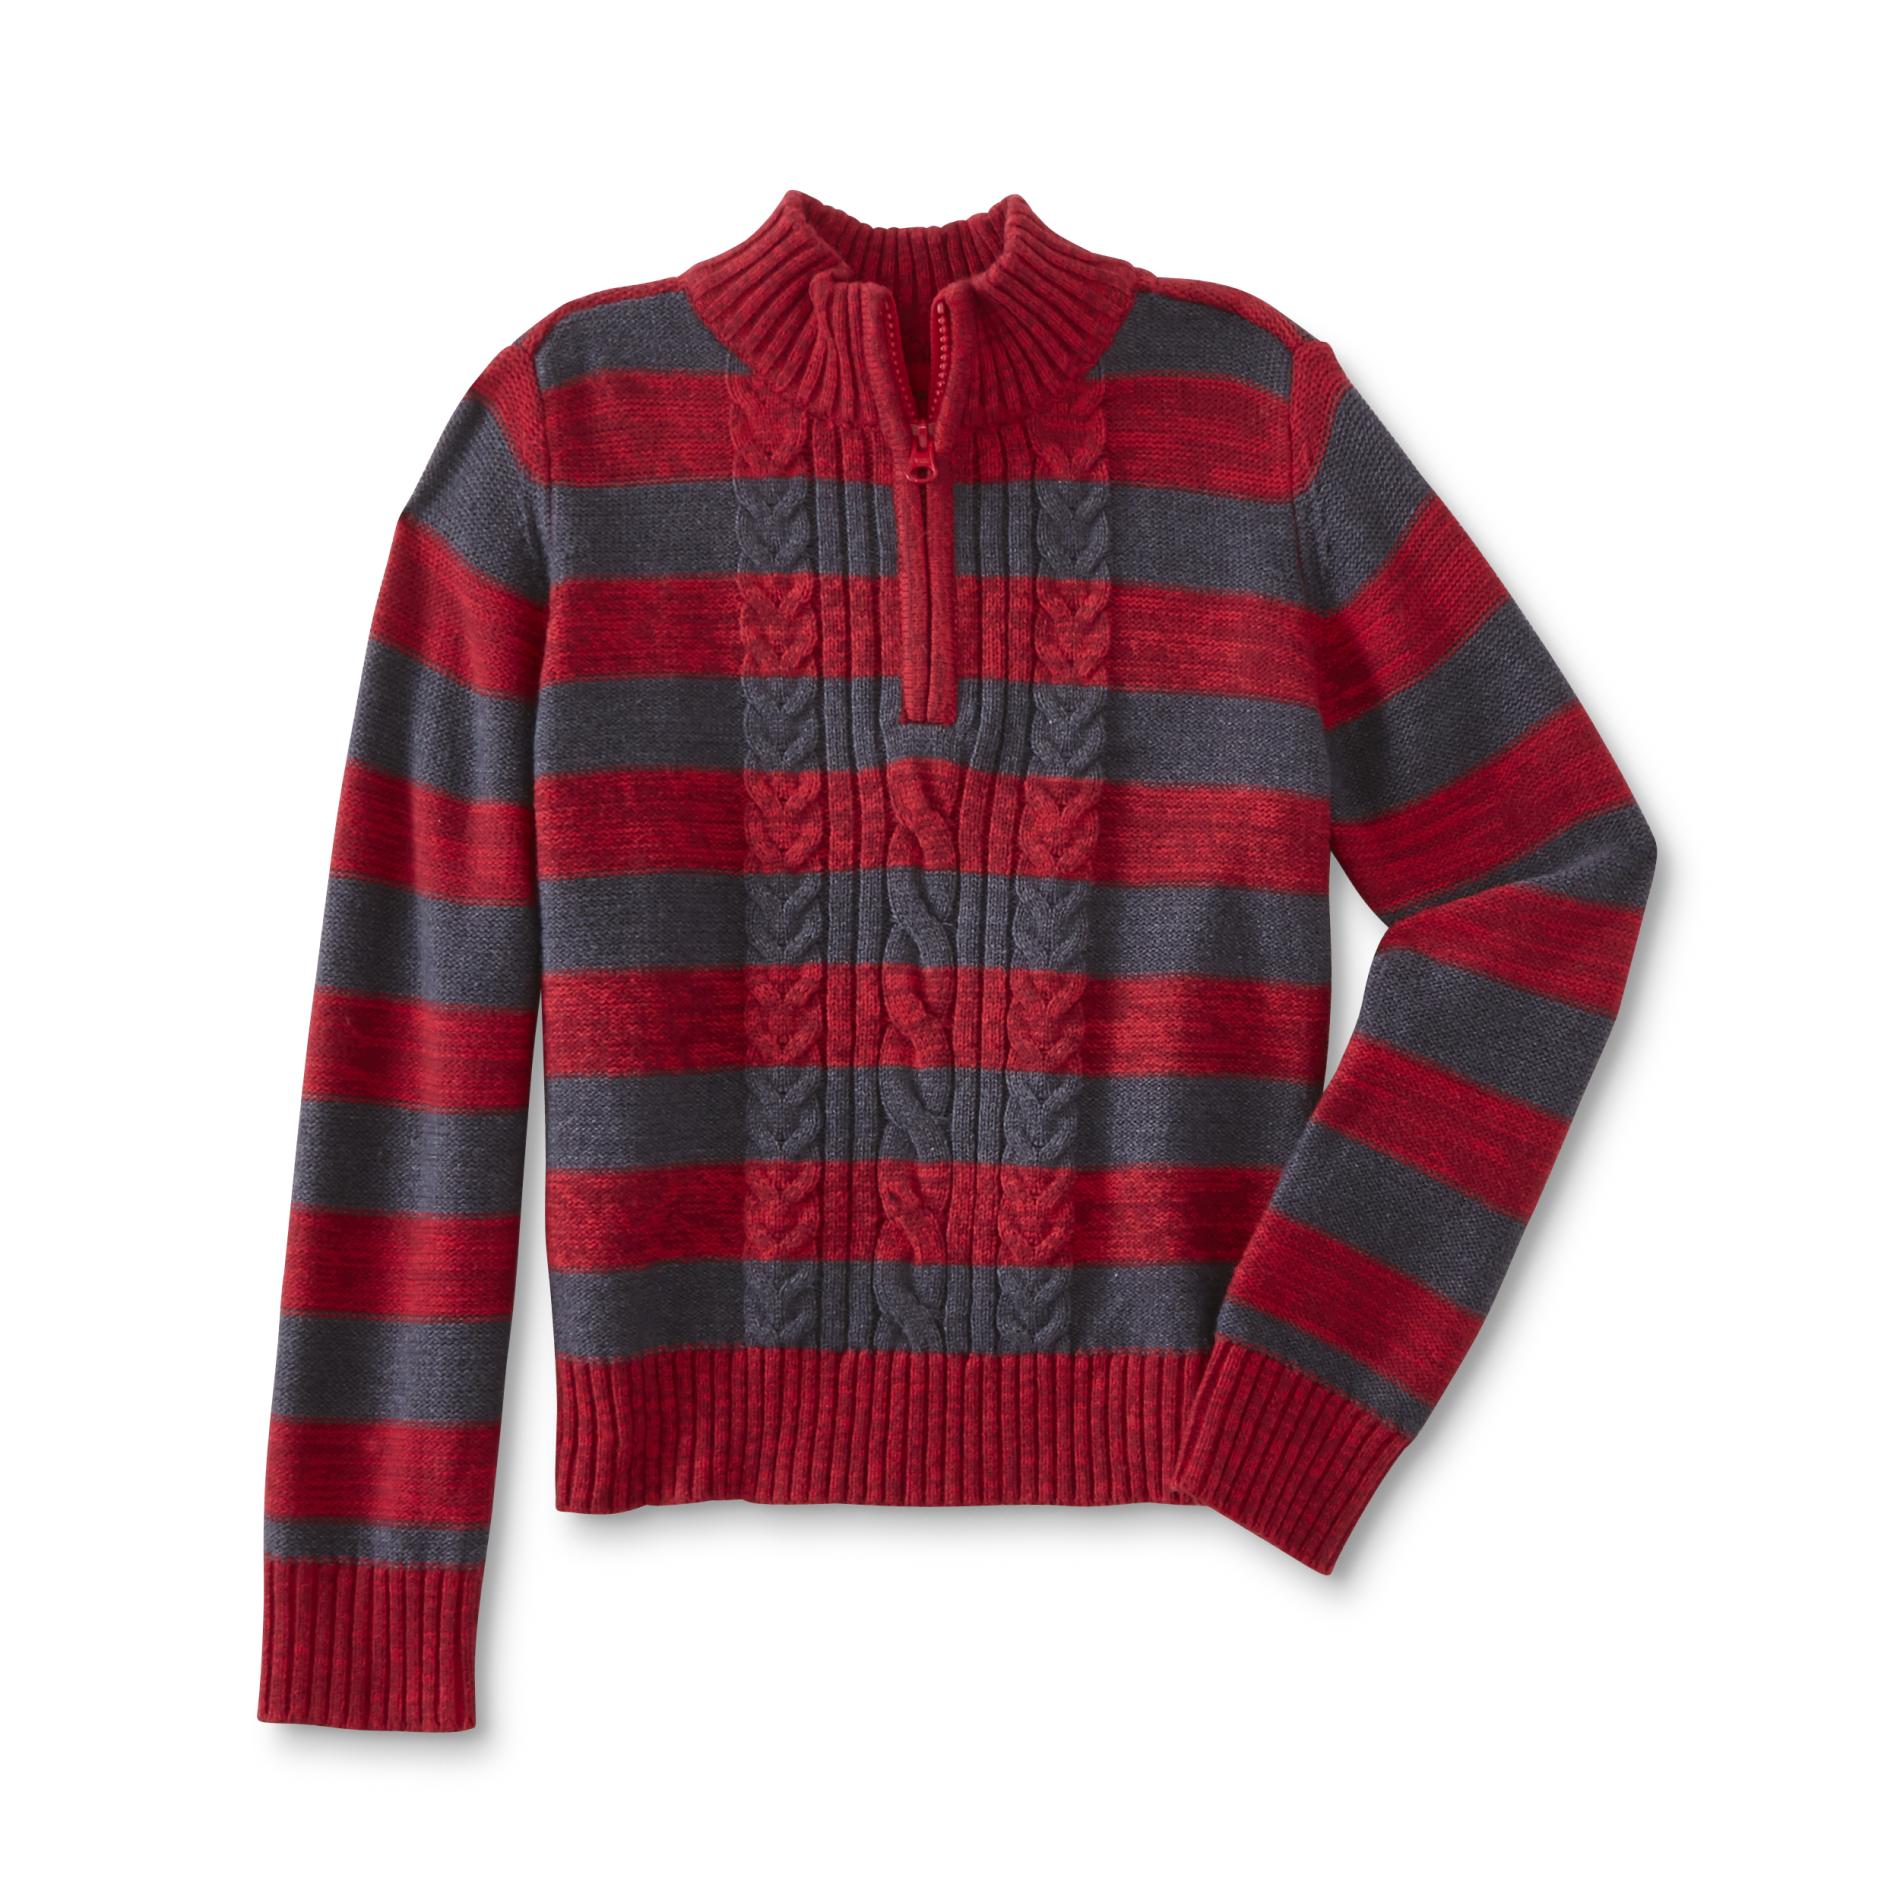 Toughskins Boys' Quarter-Zip Sweater - Striped